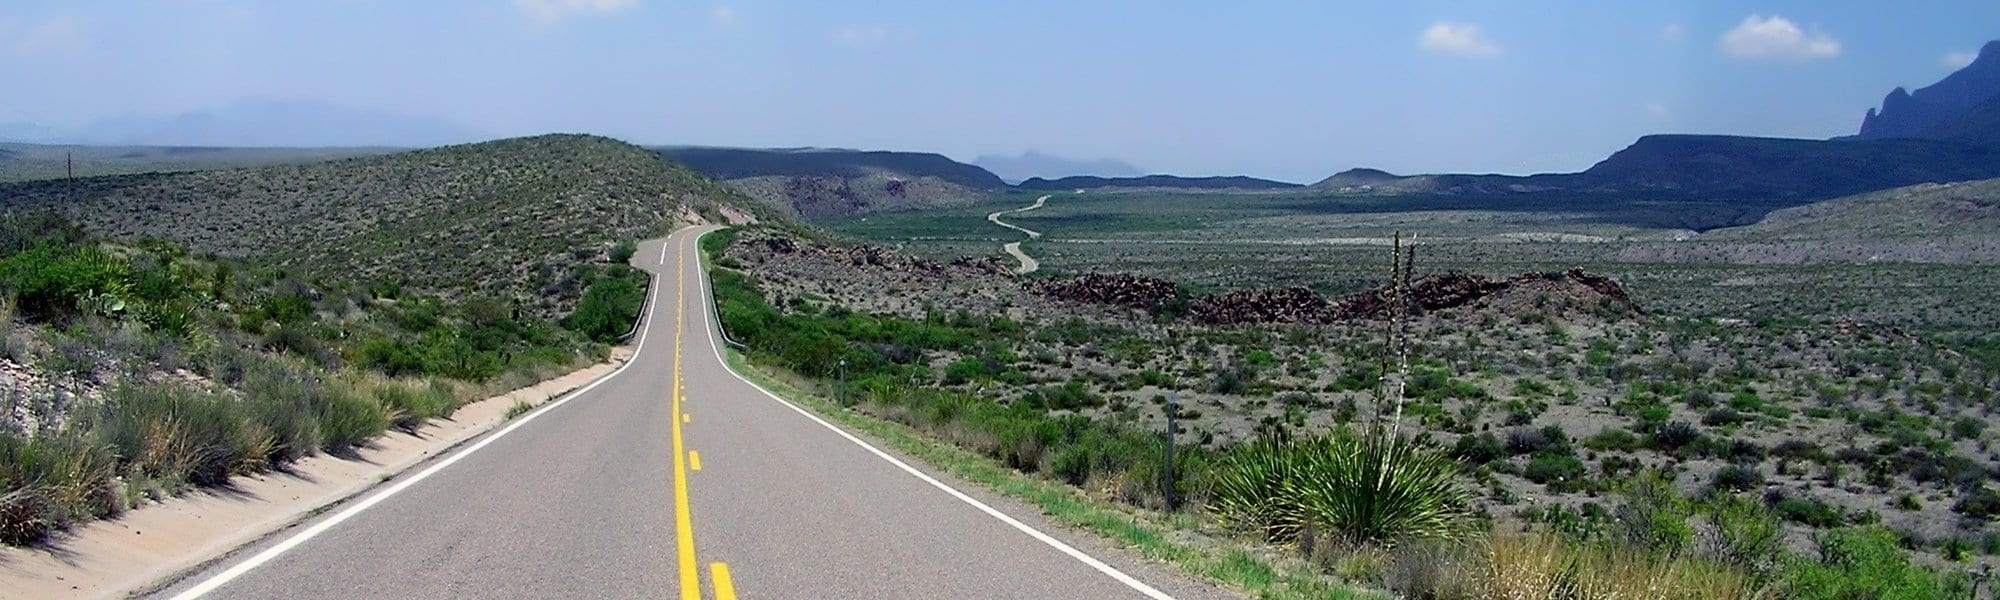 image of desert highway